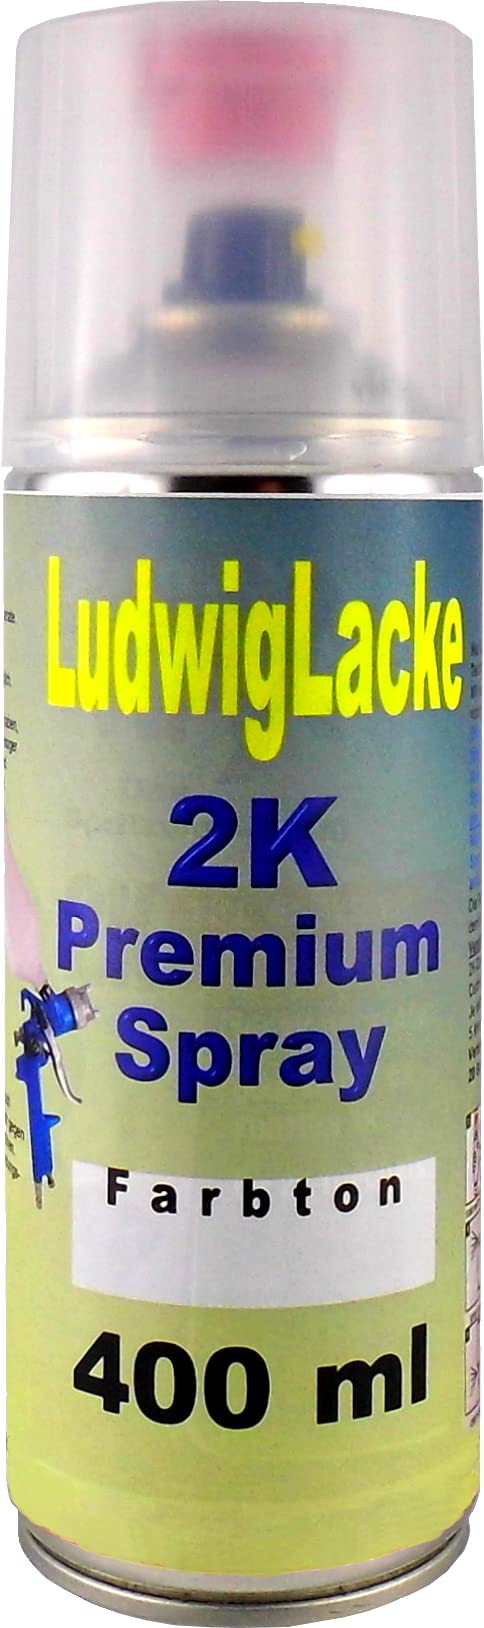 RAL 7035 LICHTGRAU 2K Premium Spray SEIDENMATT 400ml von Ludwig Lacke